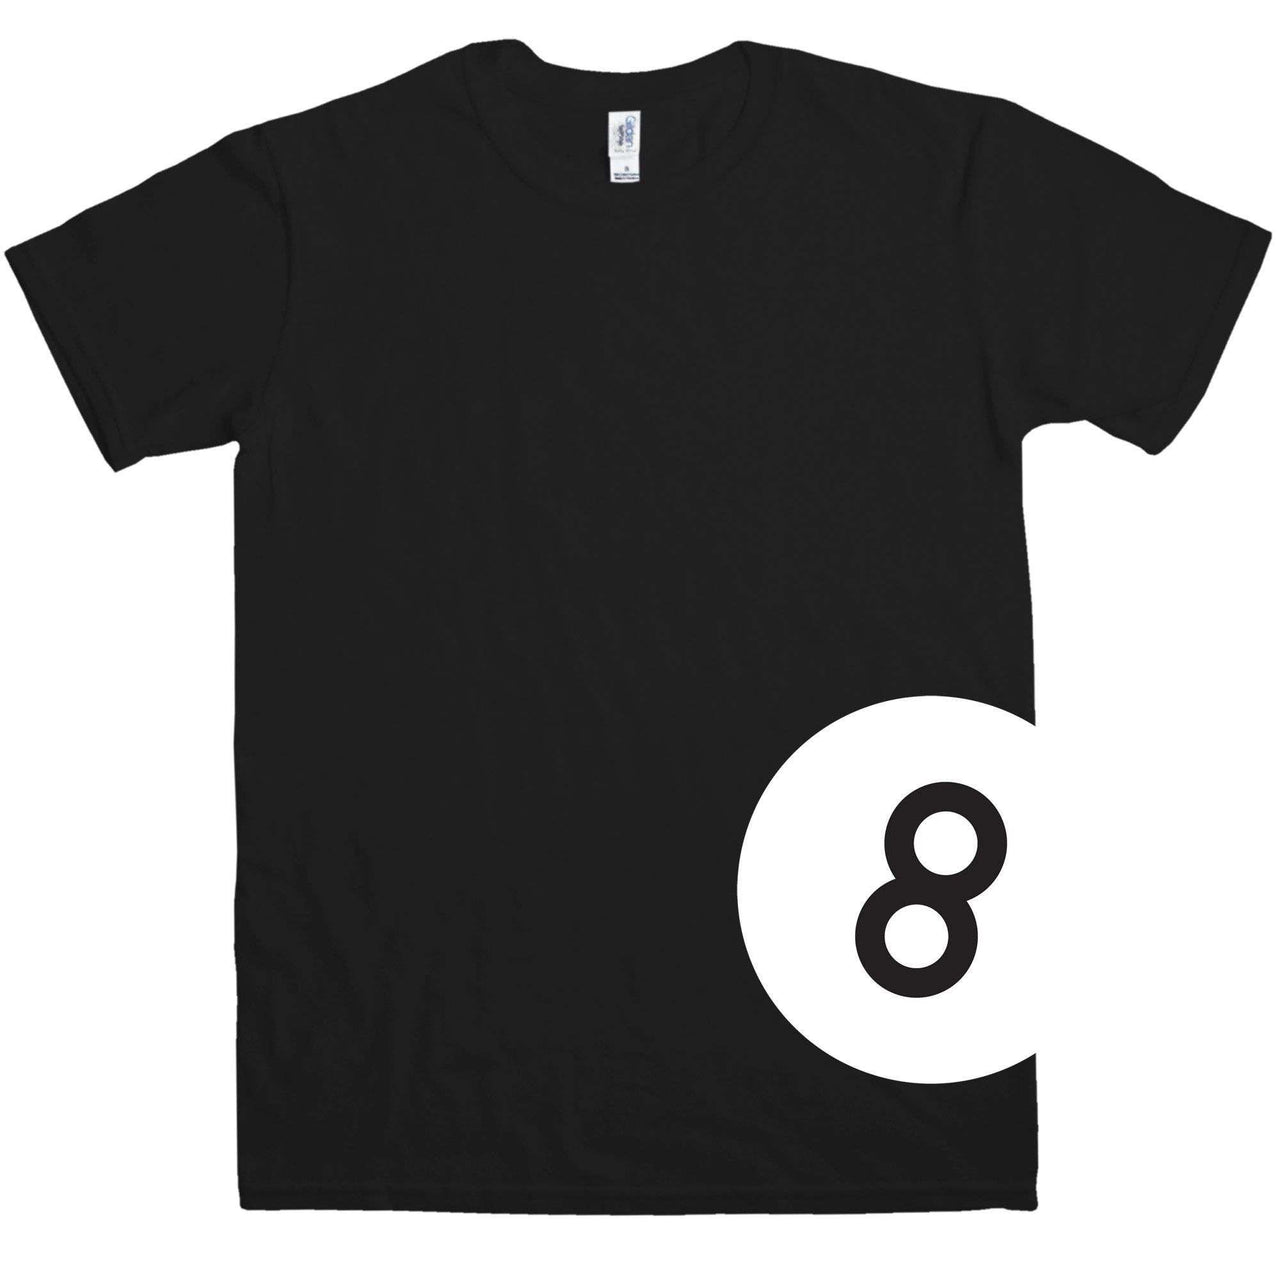 8Ball Logo Graphic T-Shirt For Men 8Ball